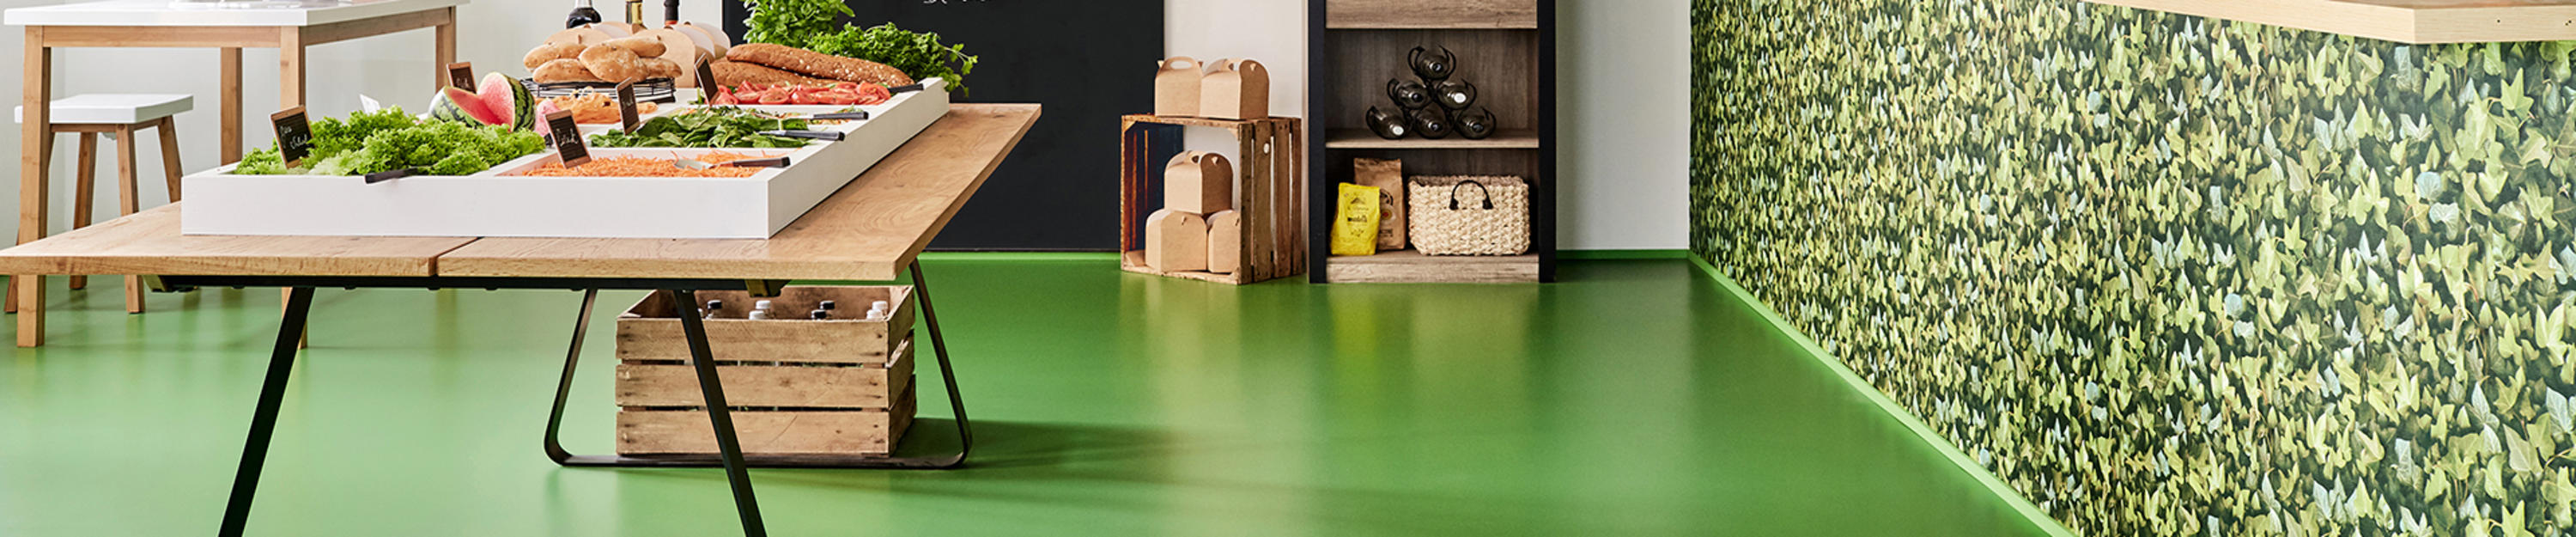 Linoleum Floors Sustainable Durable And Beautiful Tarkett